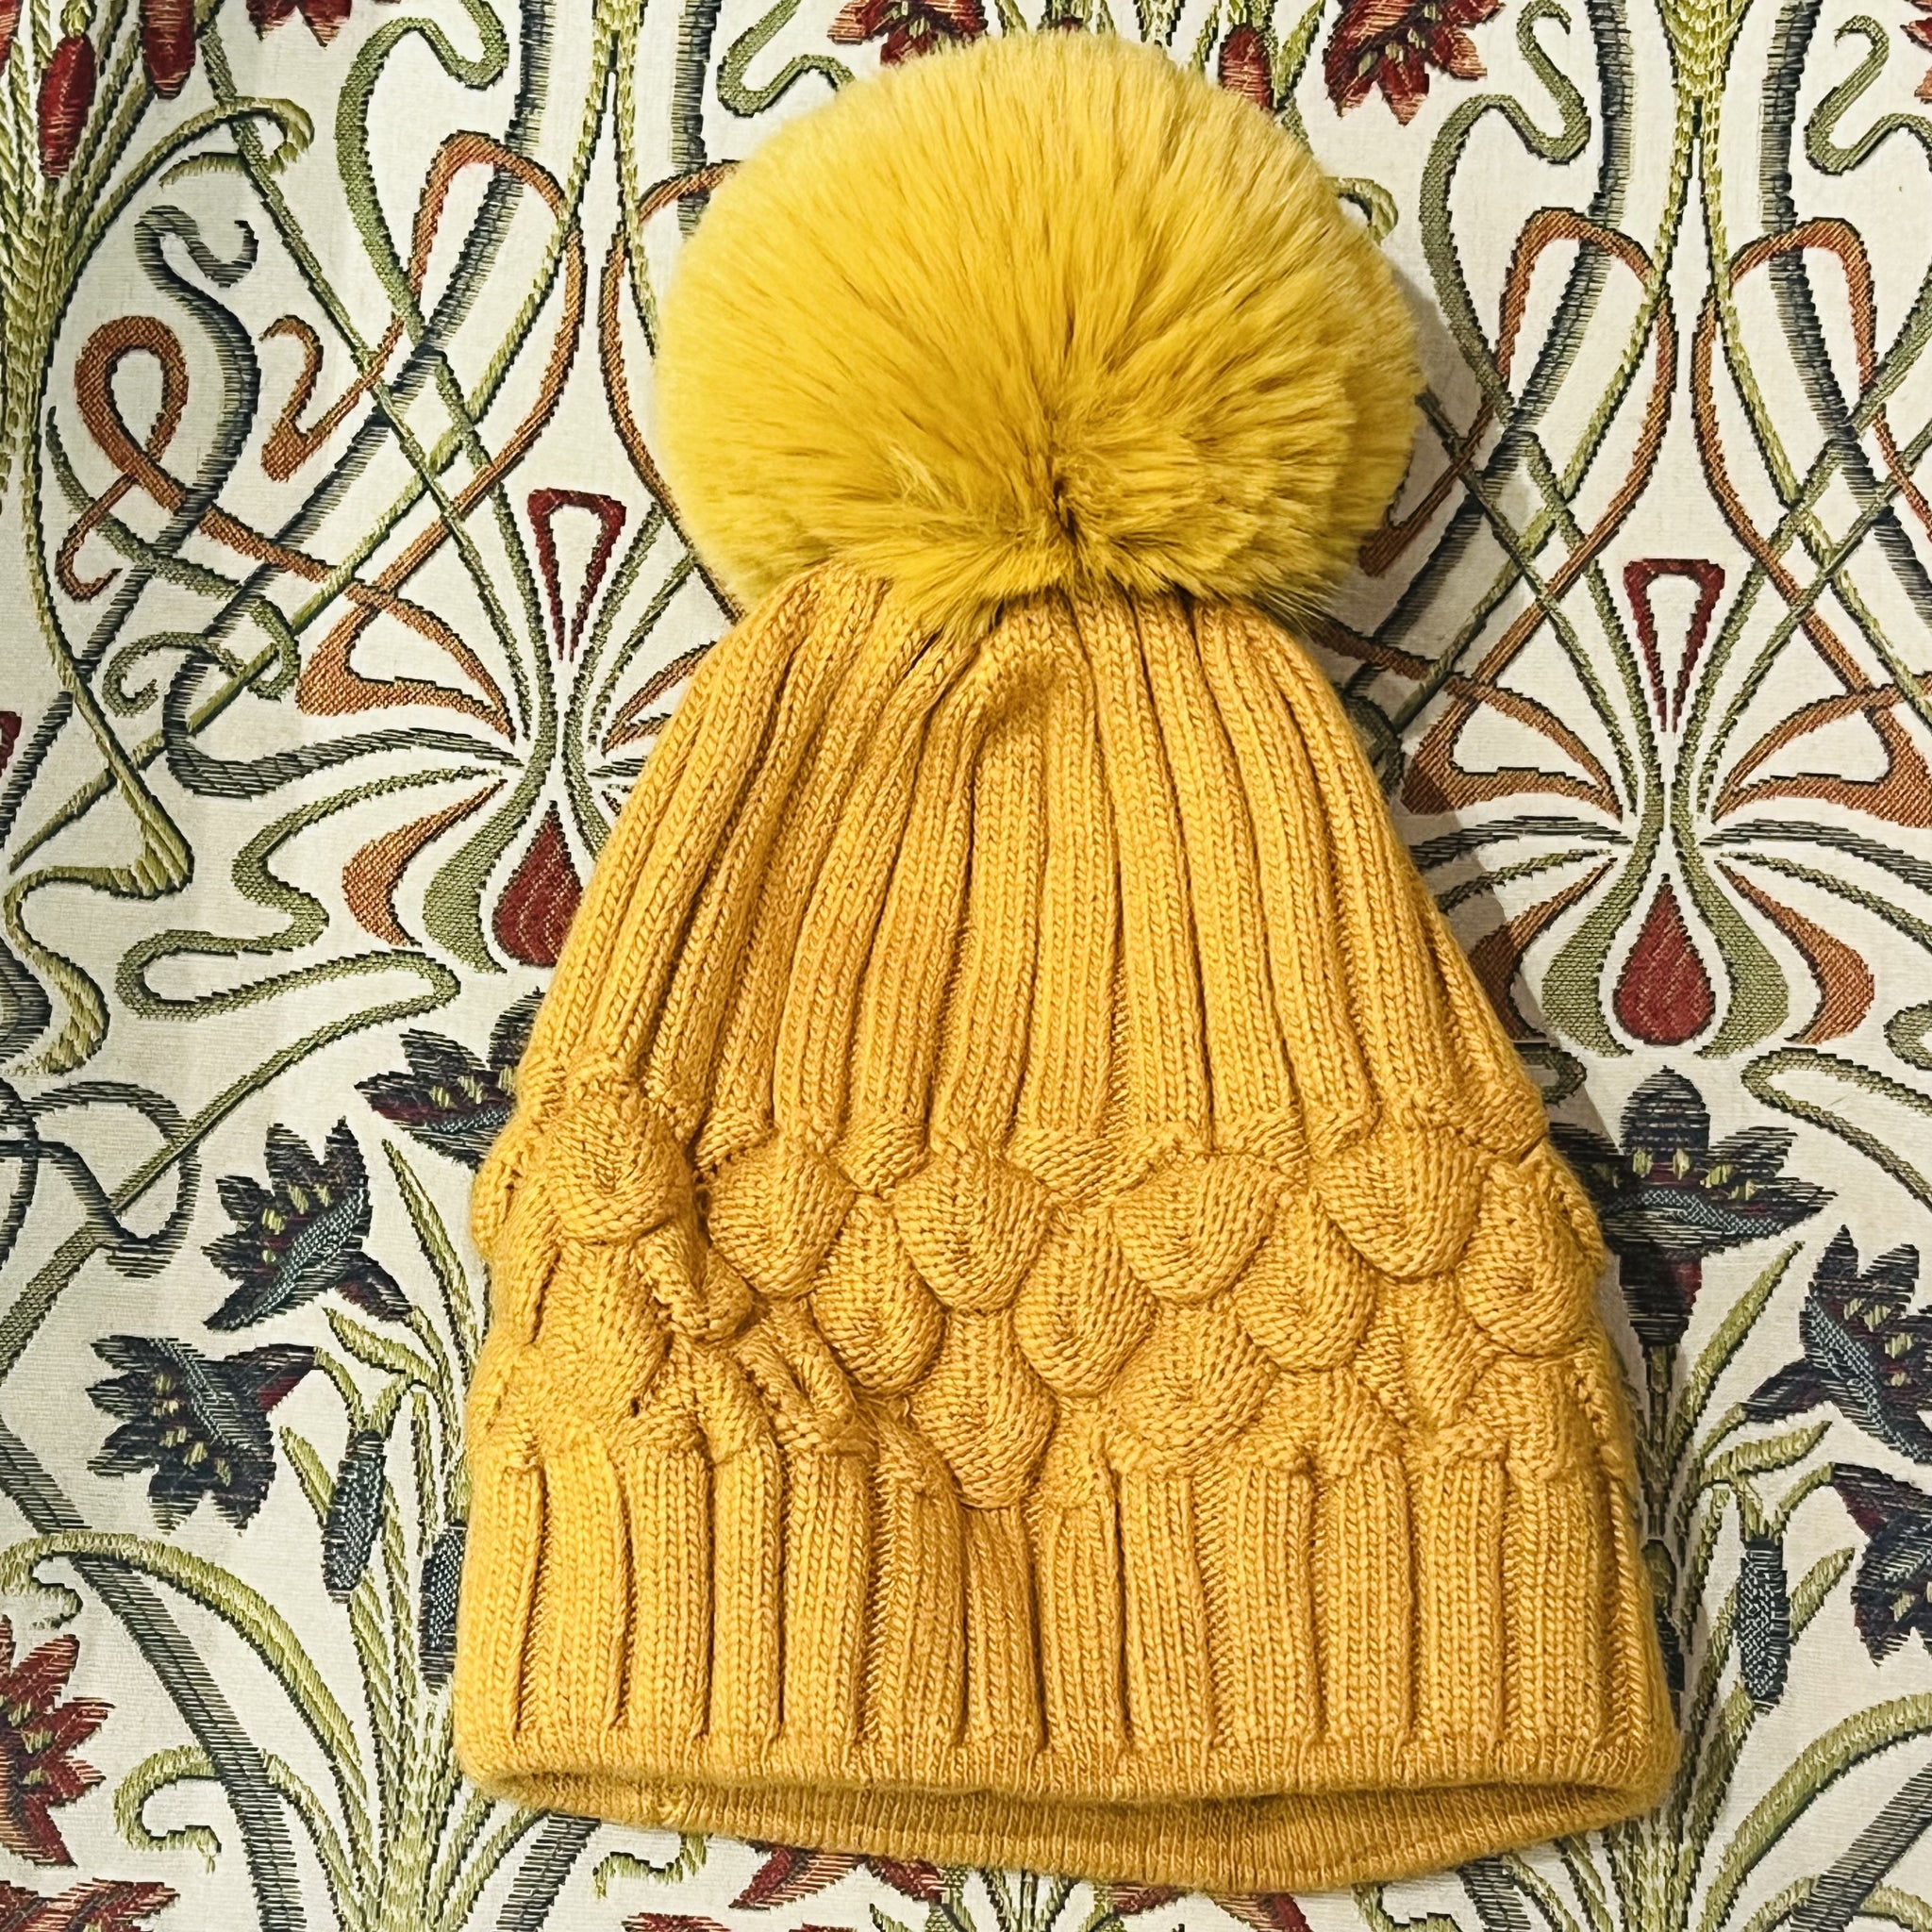 Wool Bobble Hat With Detachable Pom Pom